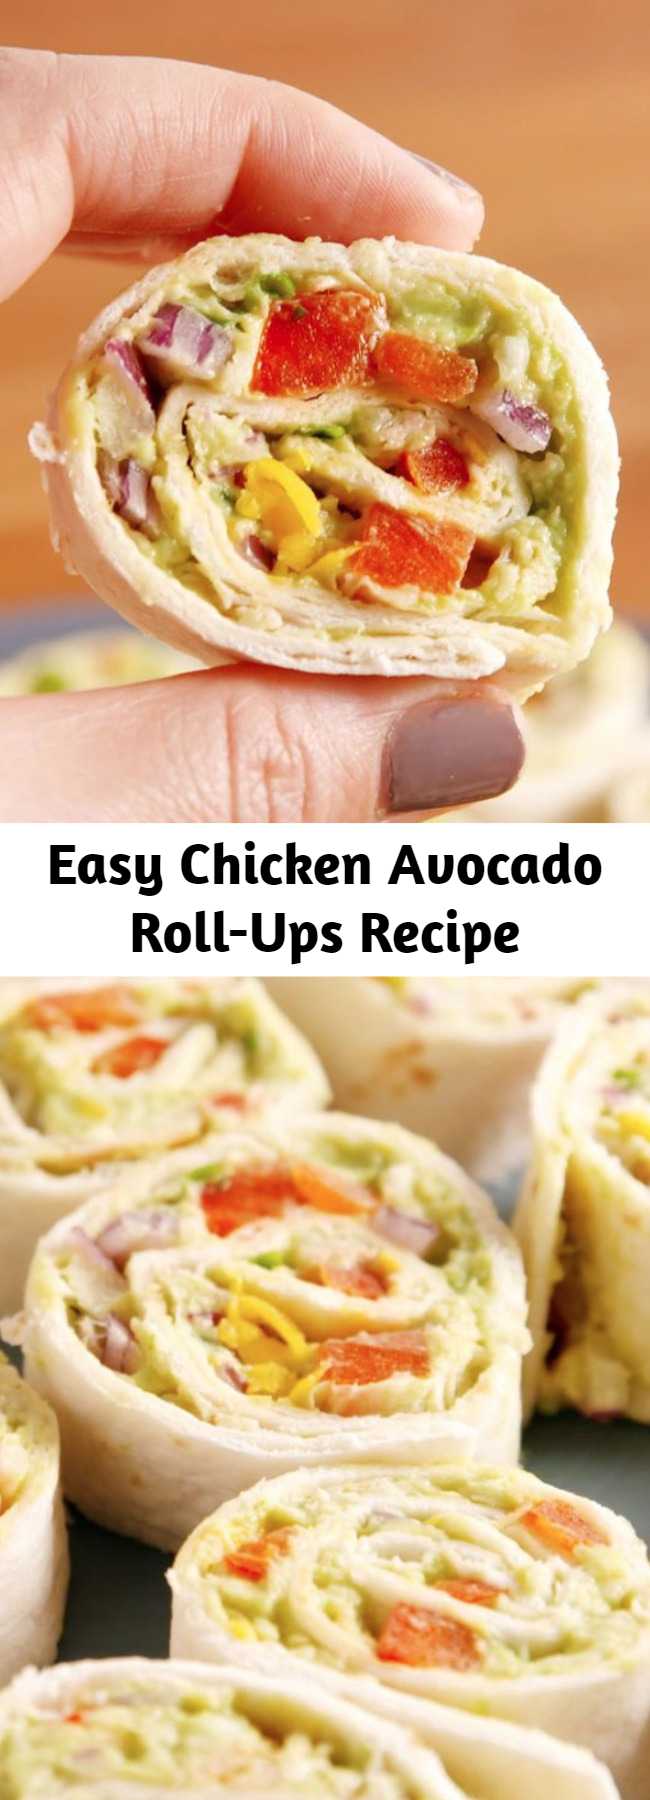 Easy Chicken Avocado Roll-Ups Recipe - These easy chicken avocado salad pinwheels are way more fun than a regular sandwich. These chicken avocado salad pinwheels double as a nutritious lunch and an adorable party appetizer.